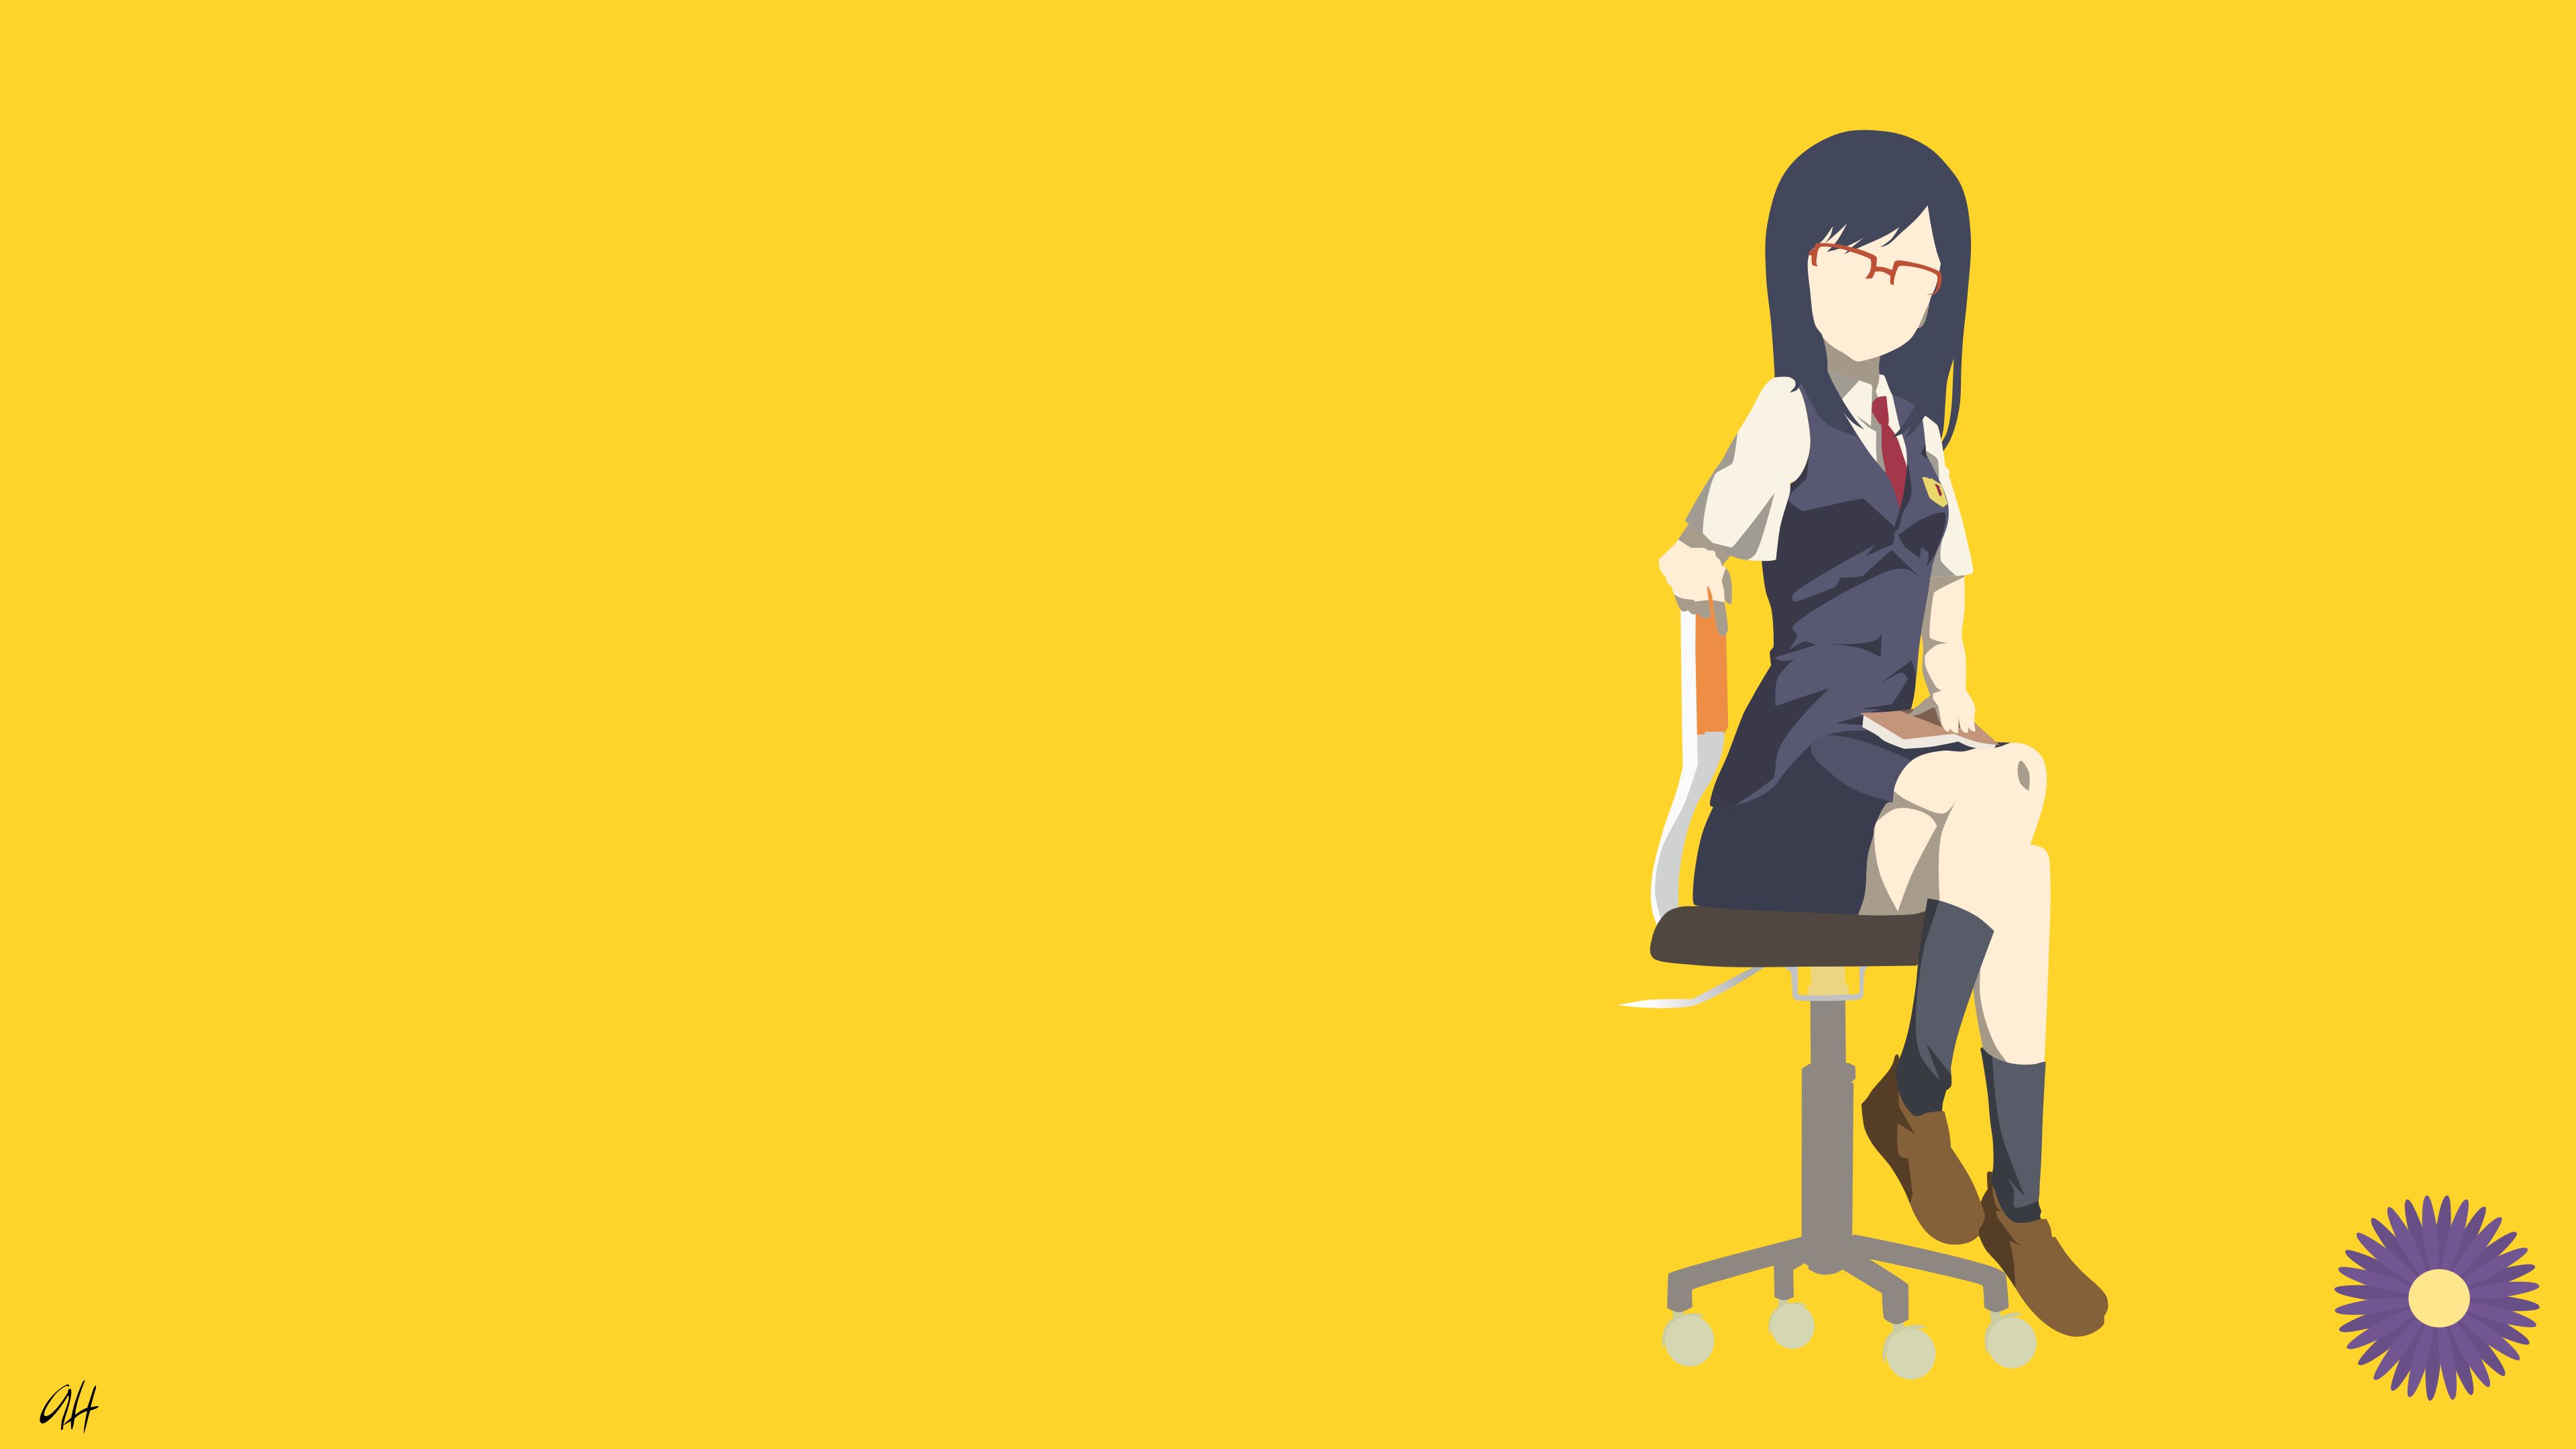 Descarga gratis la imagen Animado, Minimalista, Anohana, Chiriko Tsurumi en el escritorio de tu PC